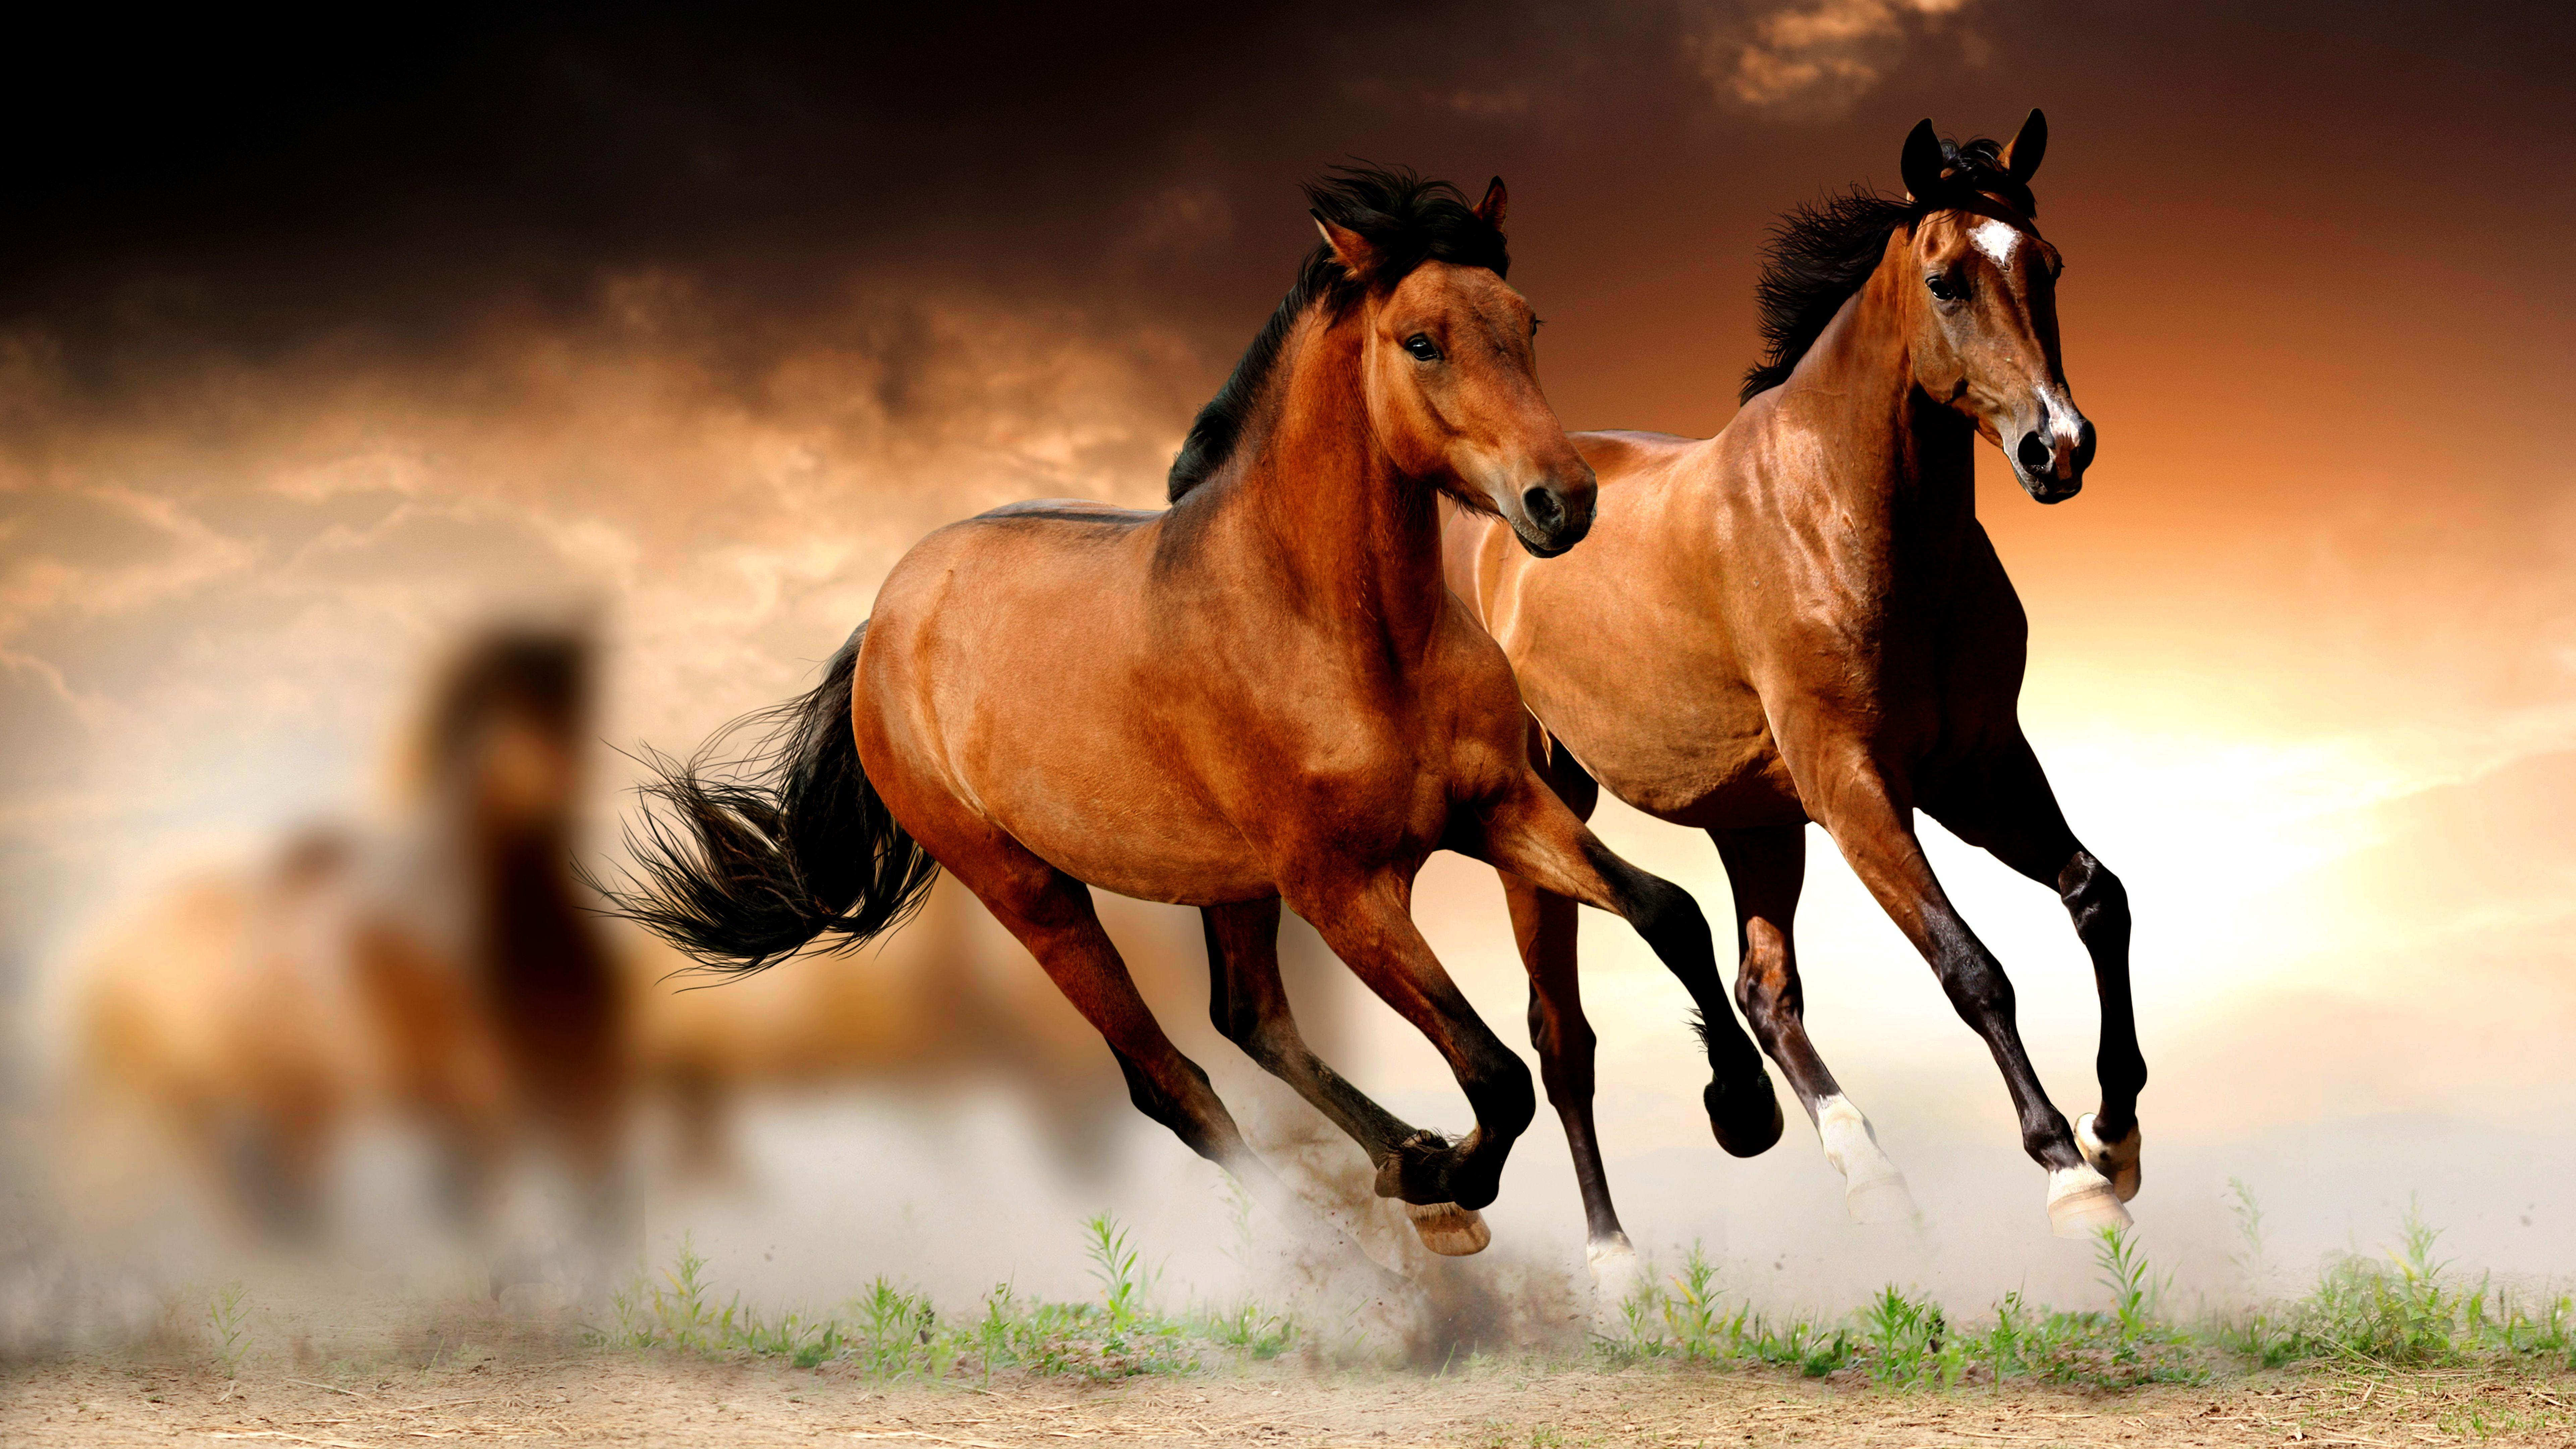 Running Horse HD Wallpaper. Horse wallpaper, Horses